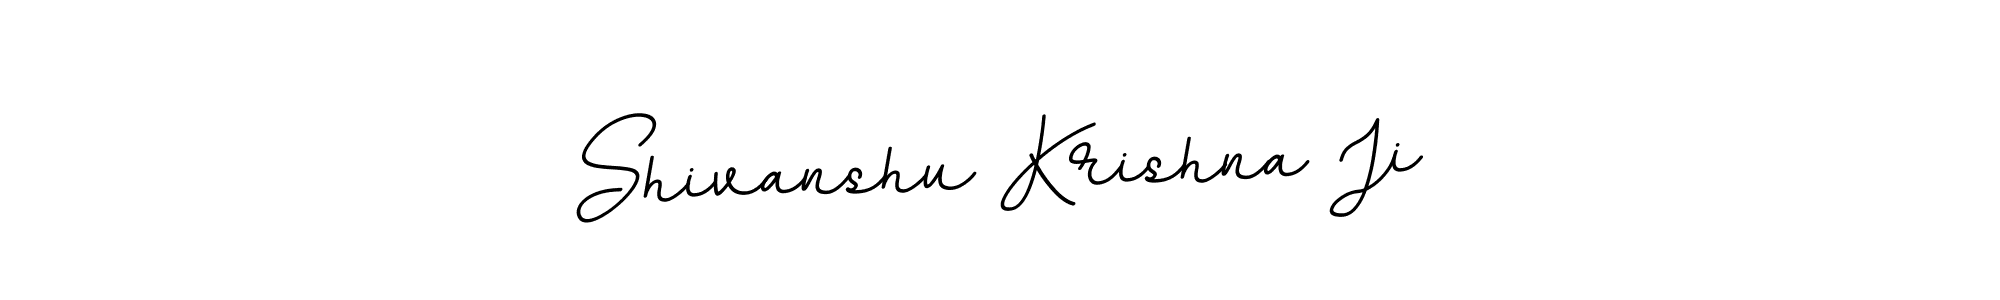 How to Draw Shivanshu Krishna Ji signature style? BallpointsItalic-DORy9 is a latest design signature styles for name Shivanshu Krishna Ji. Shivanshu Krishna Ji signature style 11 images and pictures png